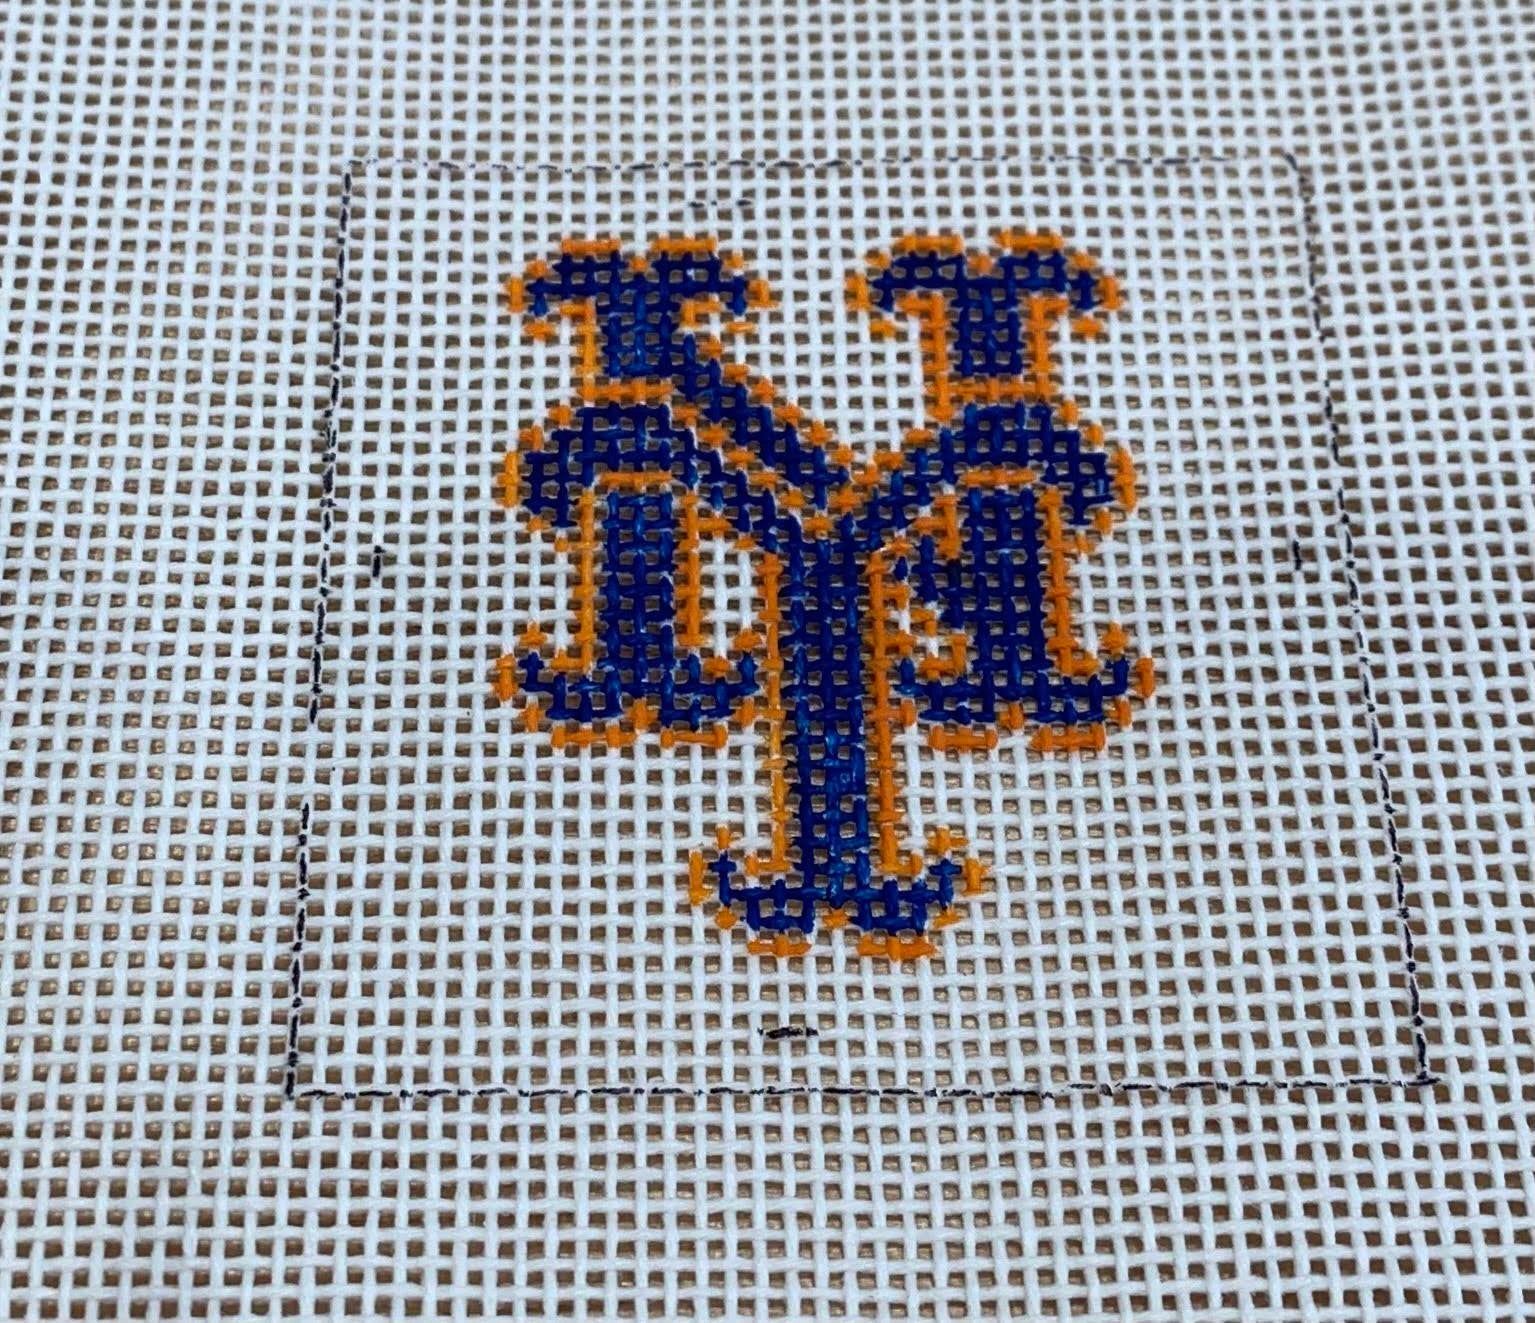 Stitch by Stitch New York Mets